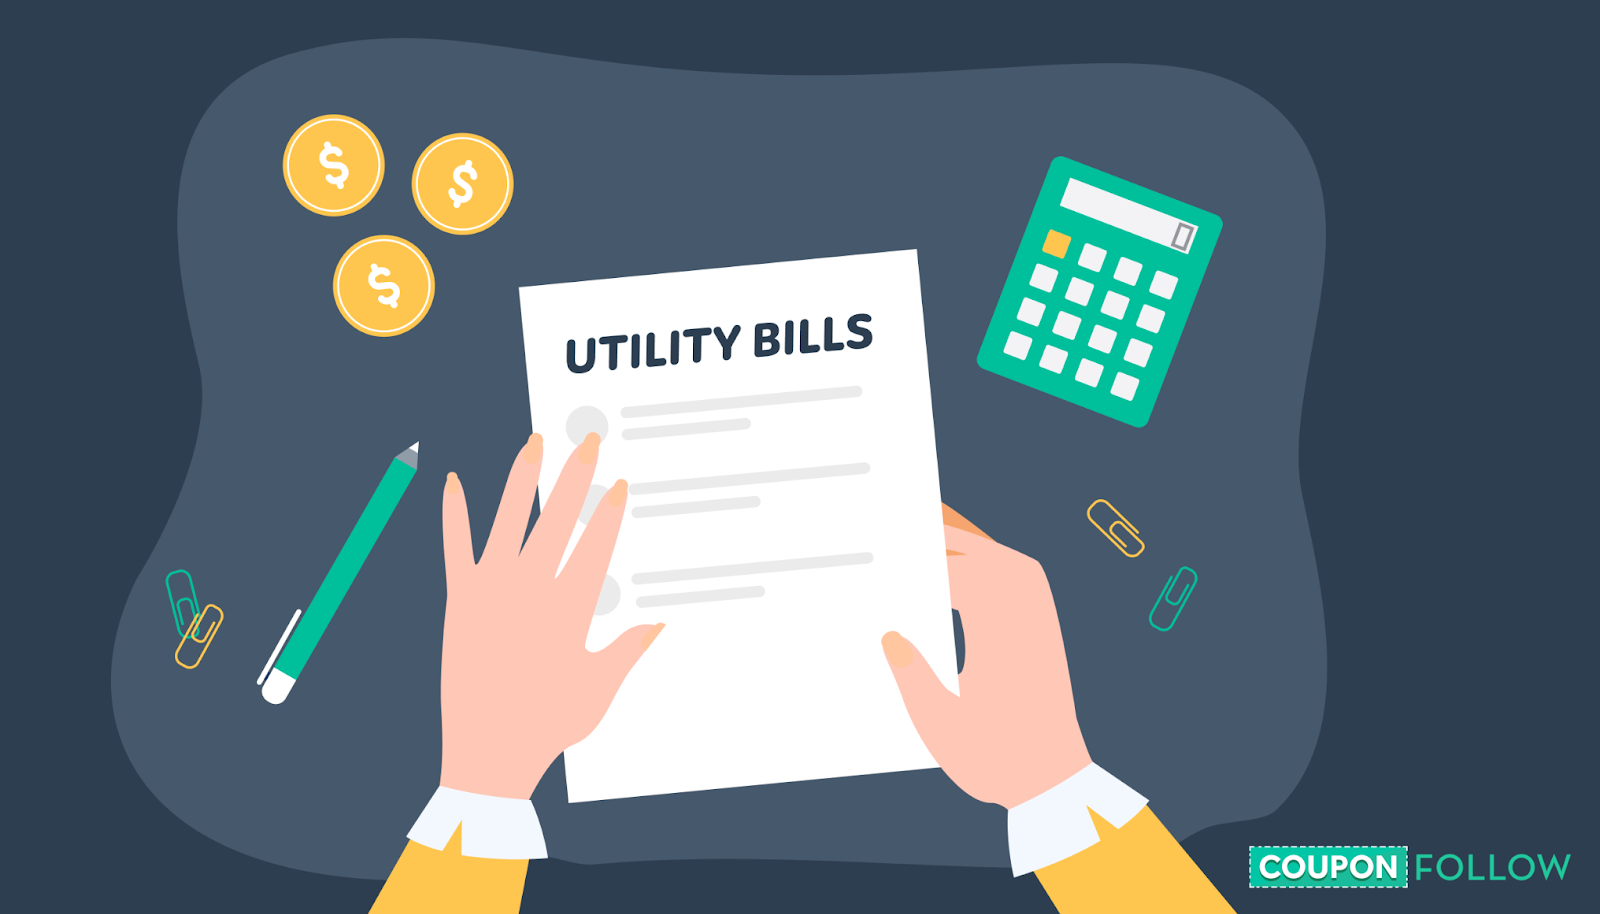 Save money on utility bills